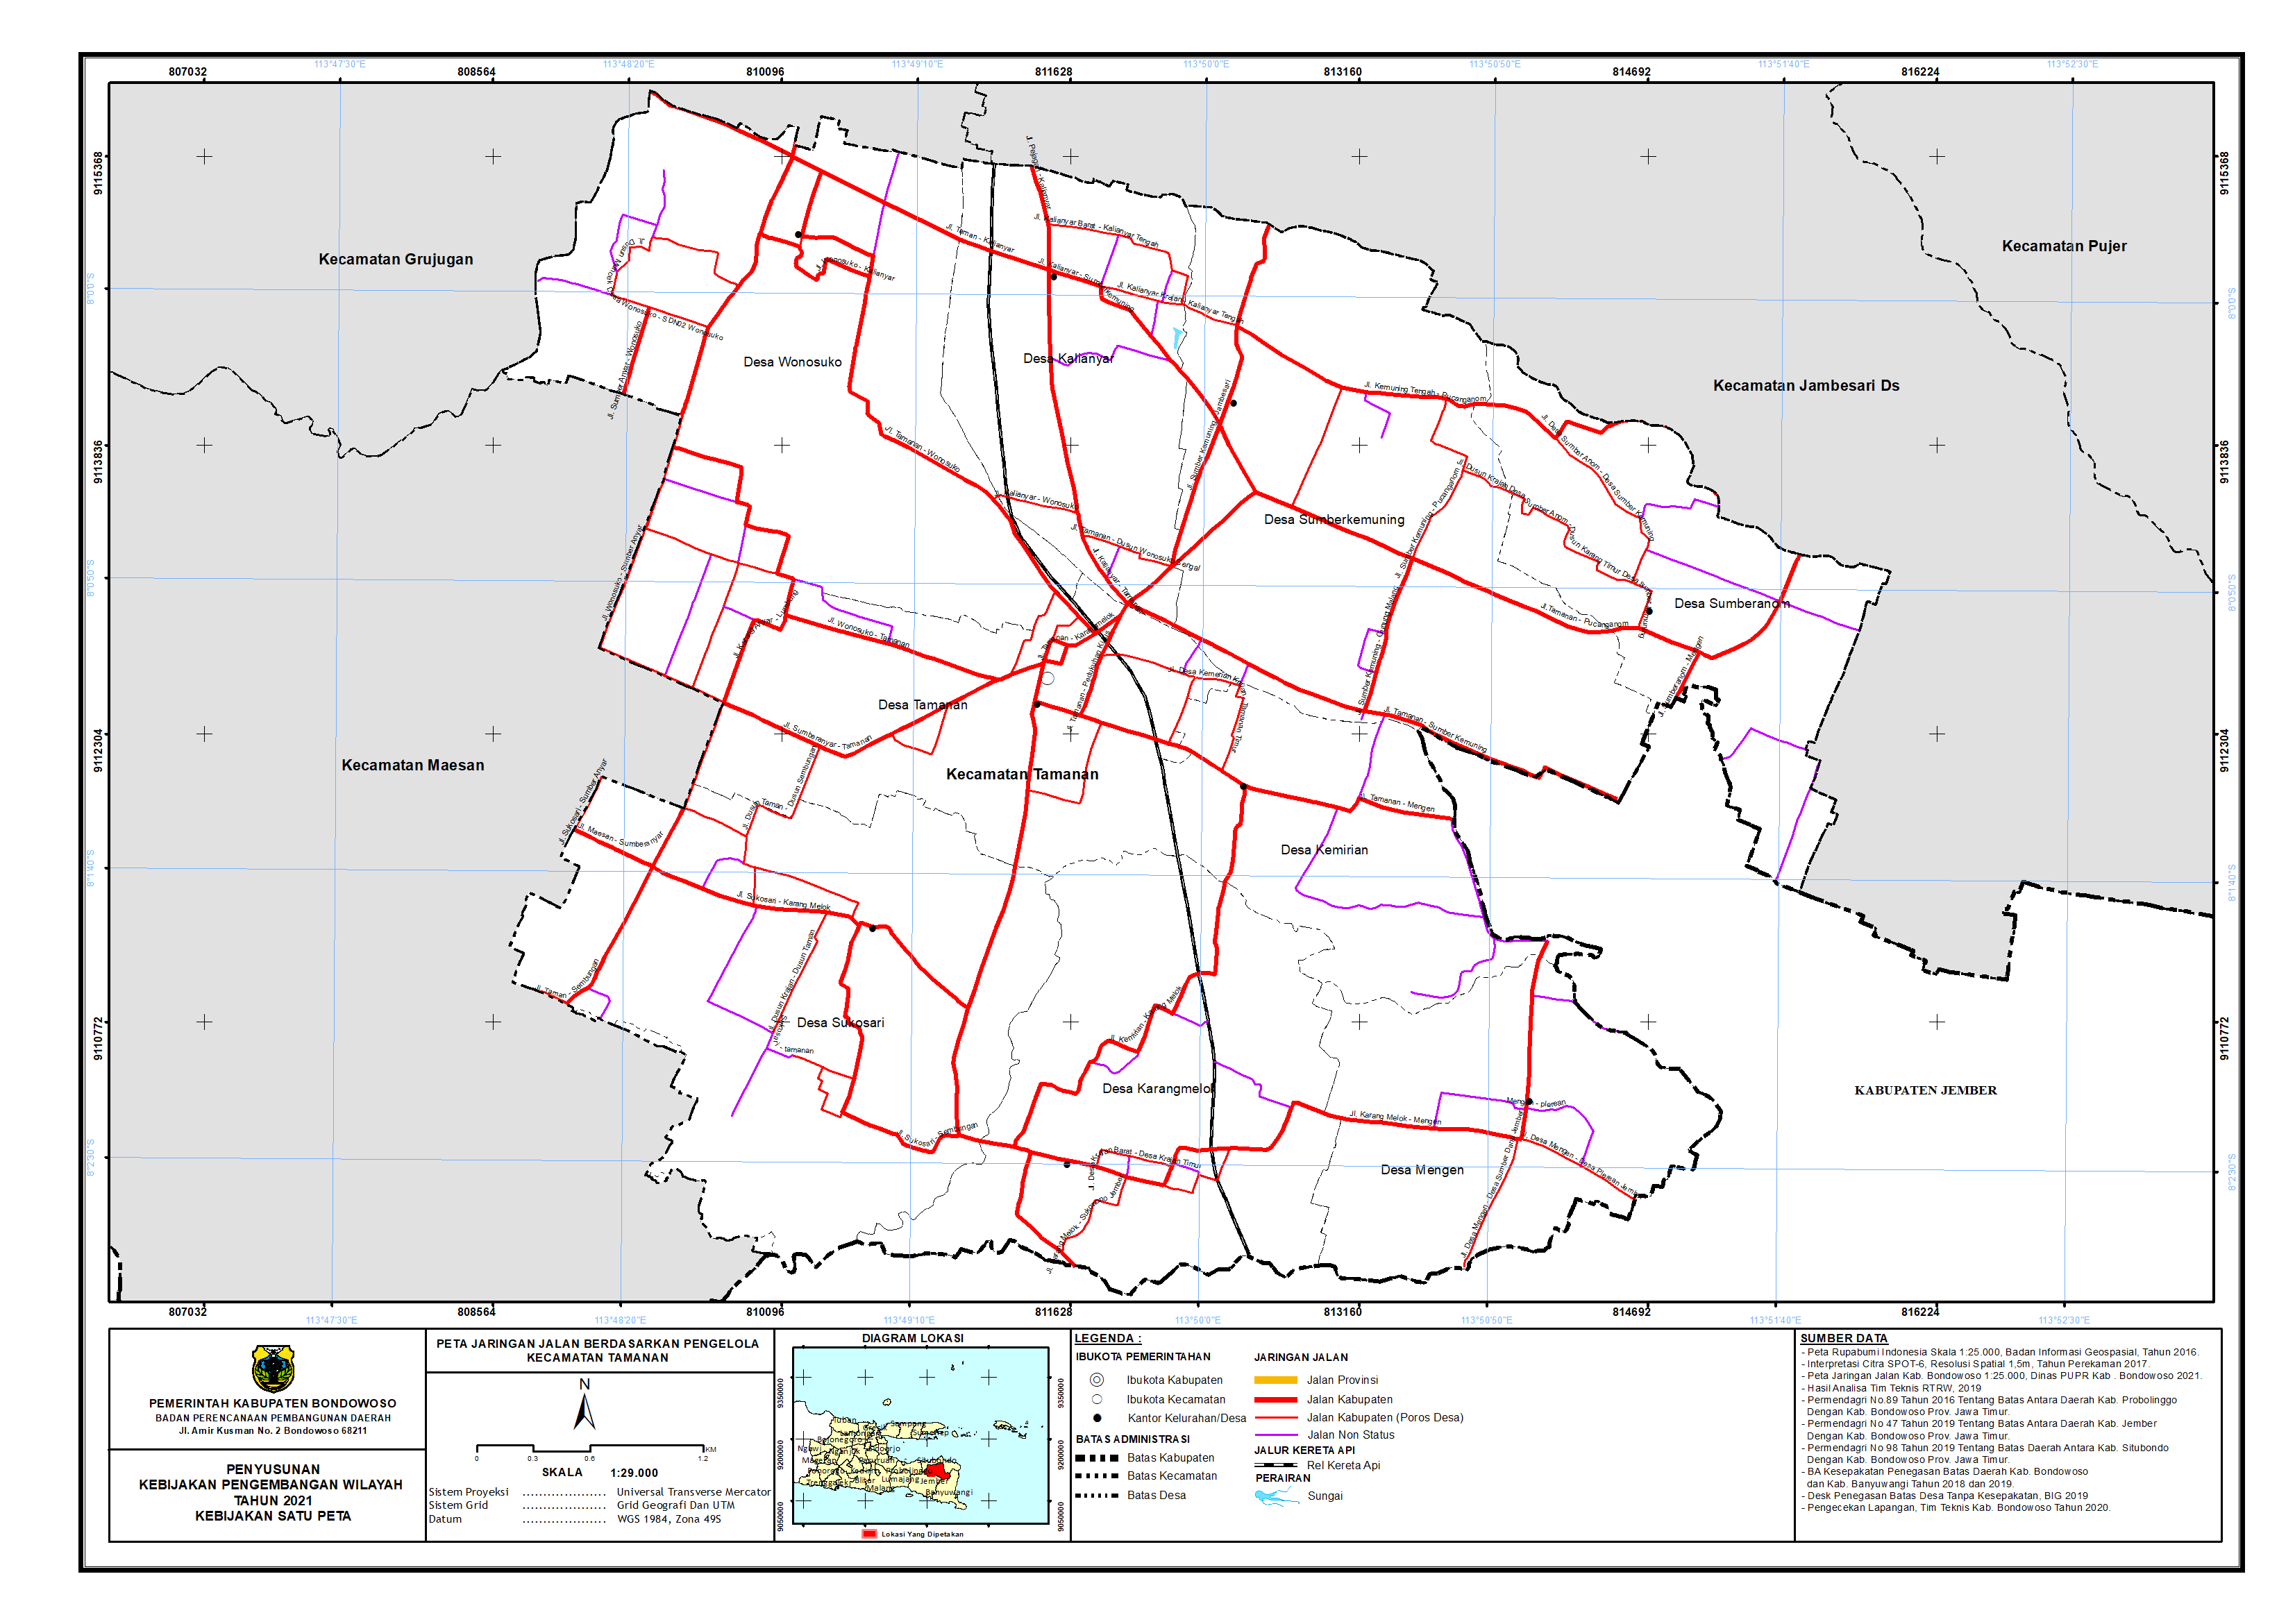 Peta Jaringan Jalan Berdasarkan Pengelola Kecamatan Tamanan.png